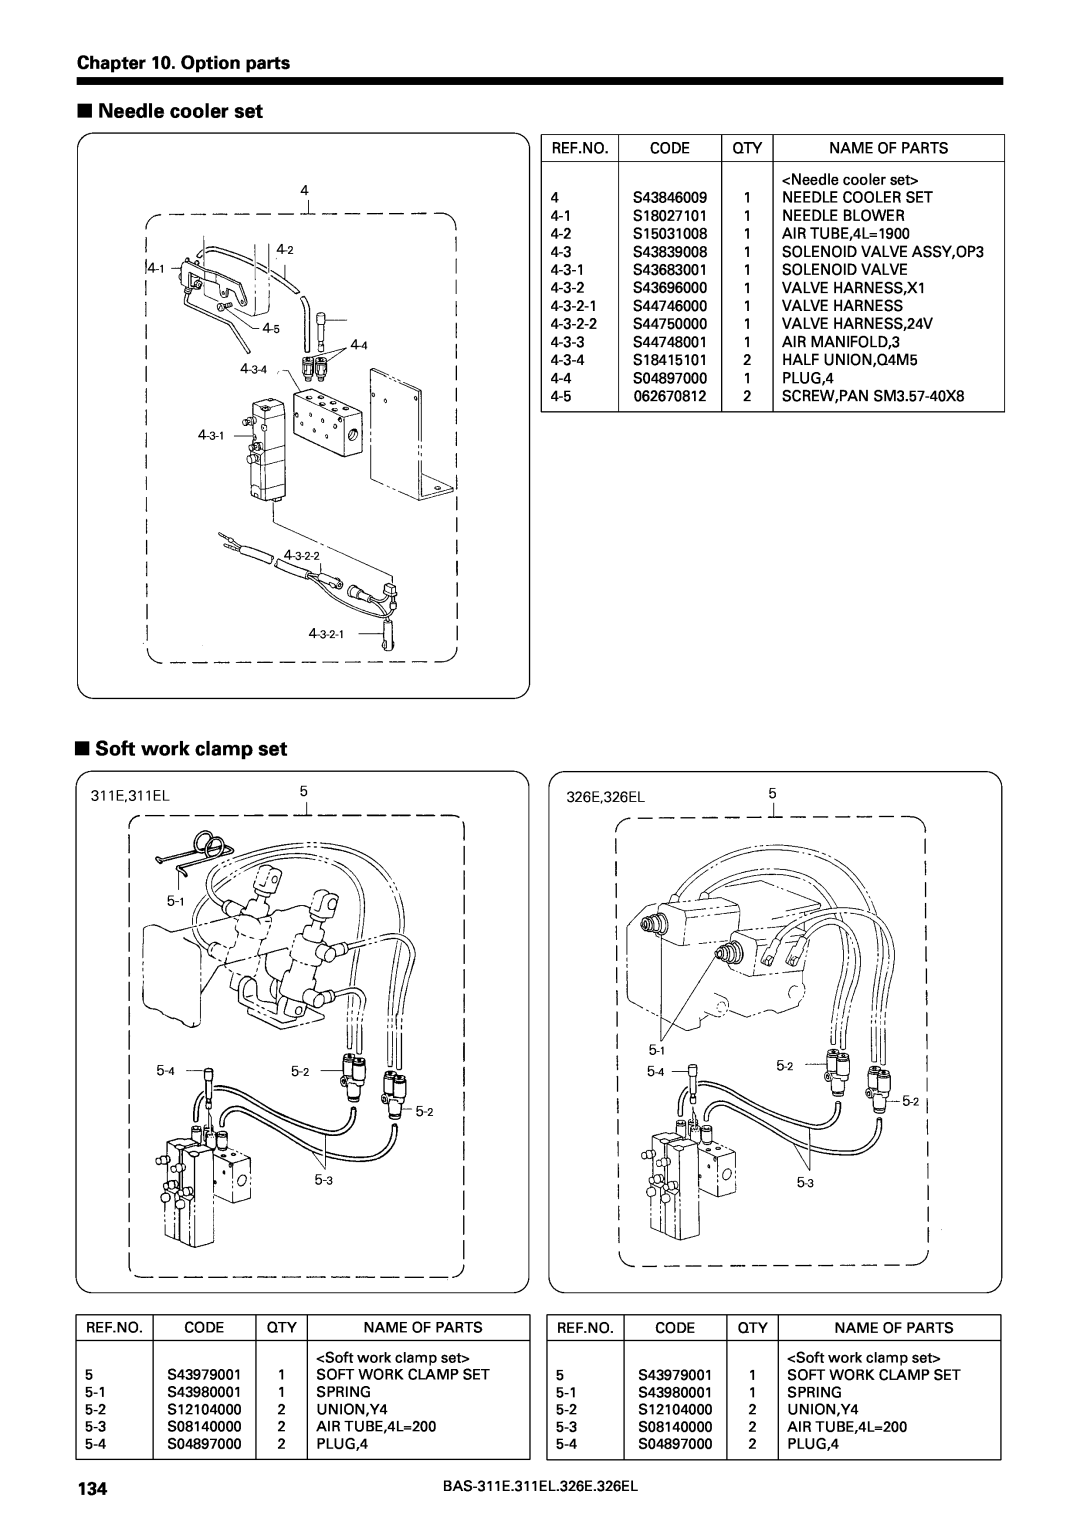 Brother BAS-311E service manual Needle cooler set, Soft work clamp set, Option parts 